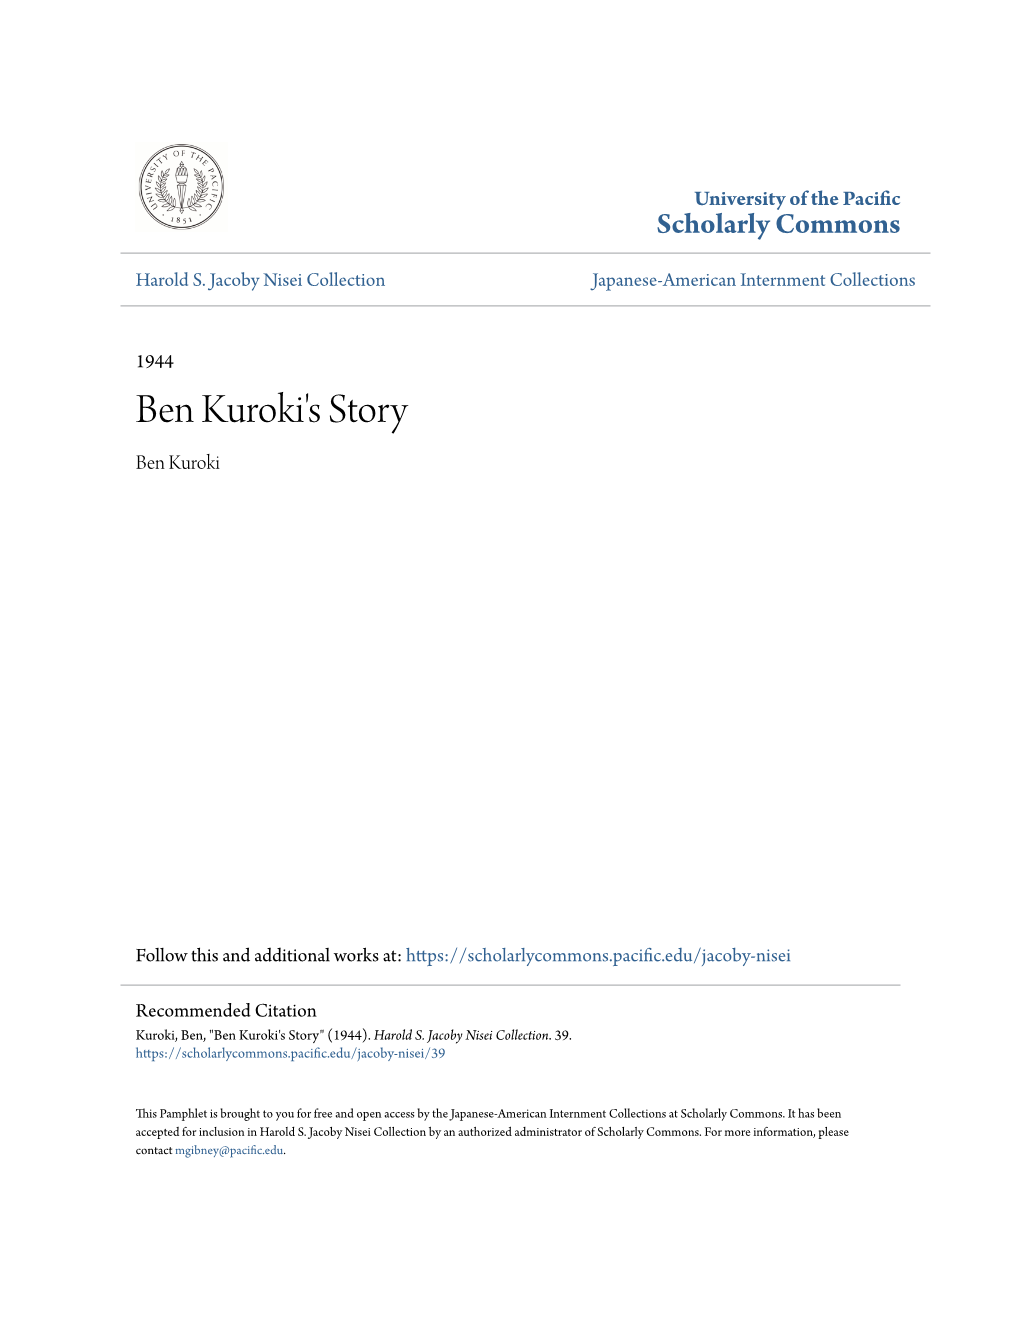 Ben Kuroki's Story Ben Kuroki